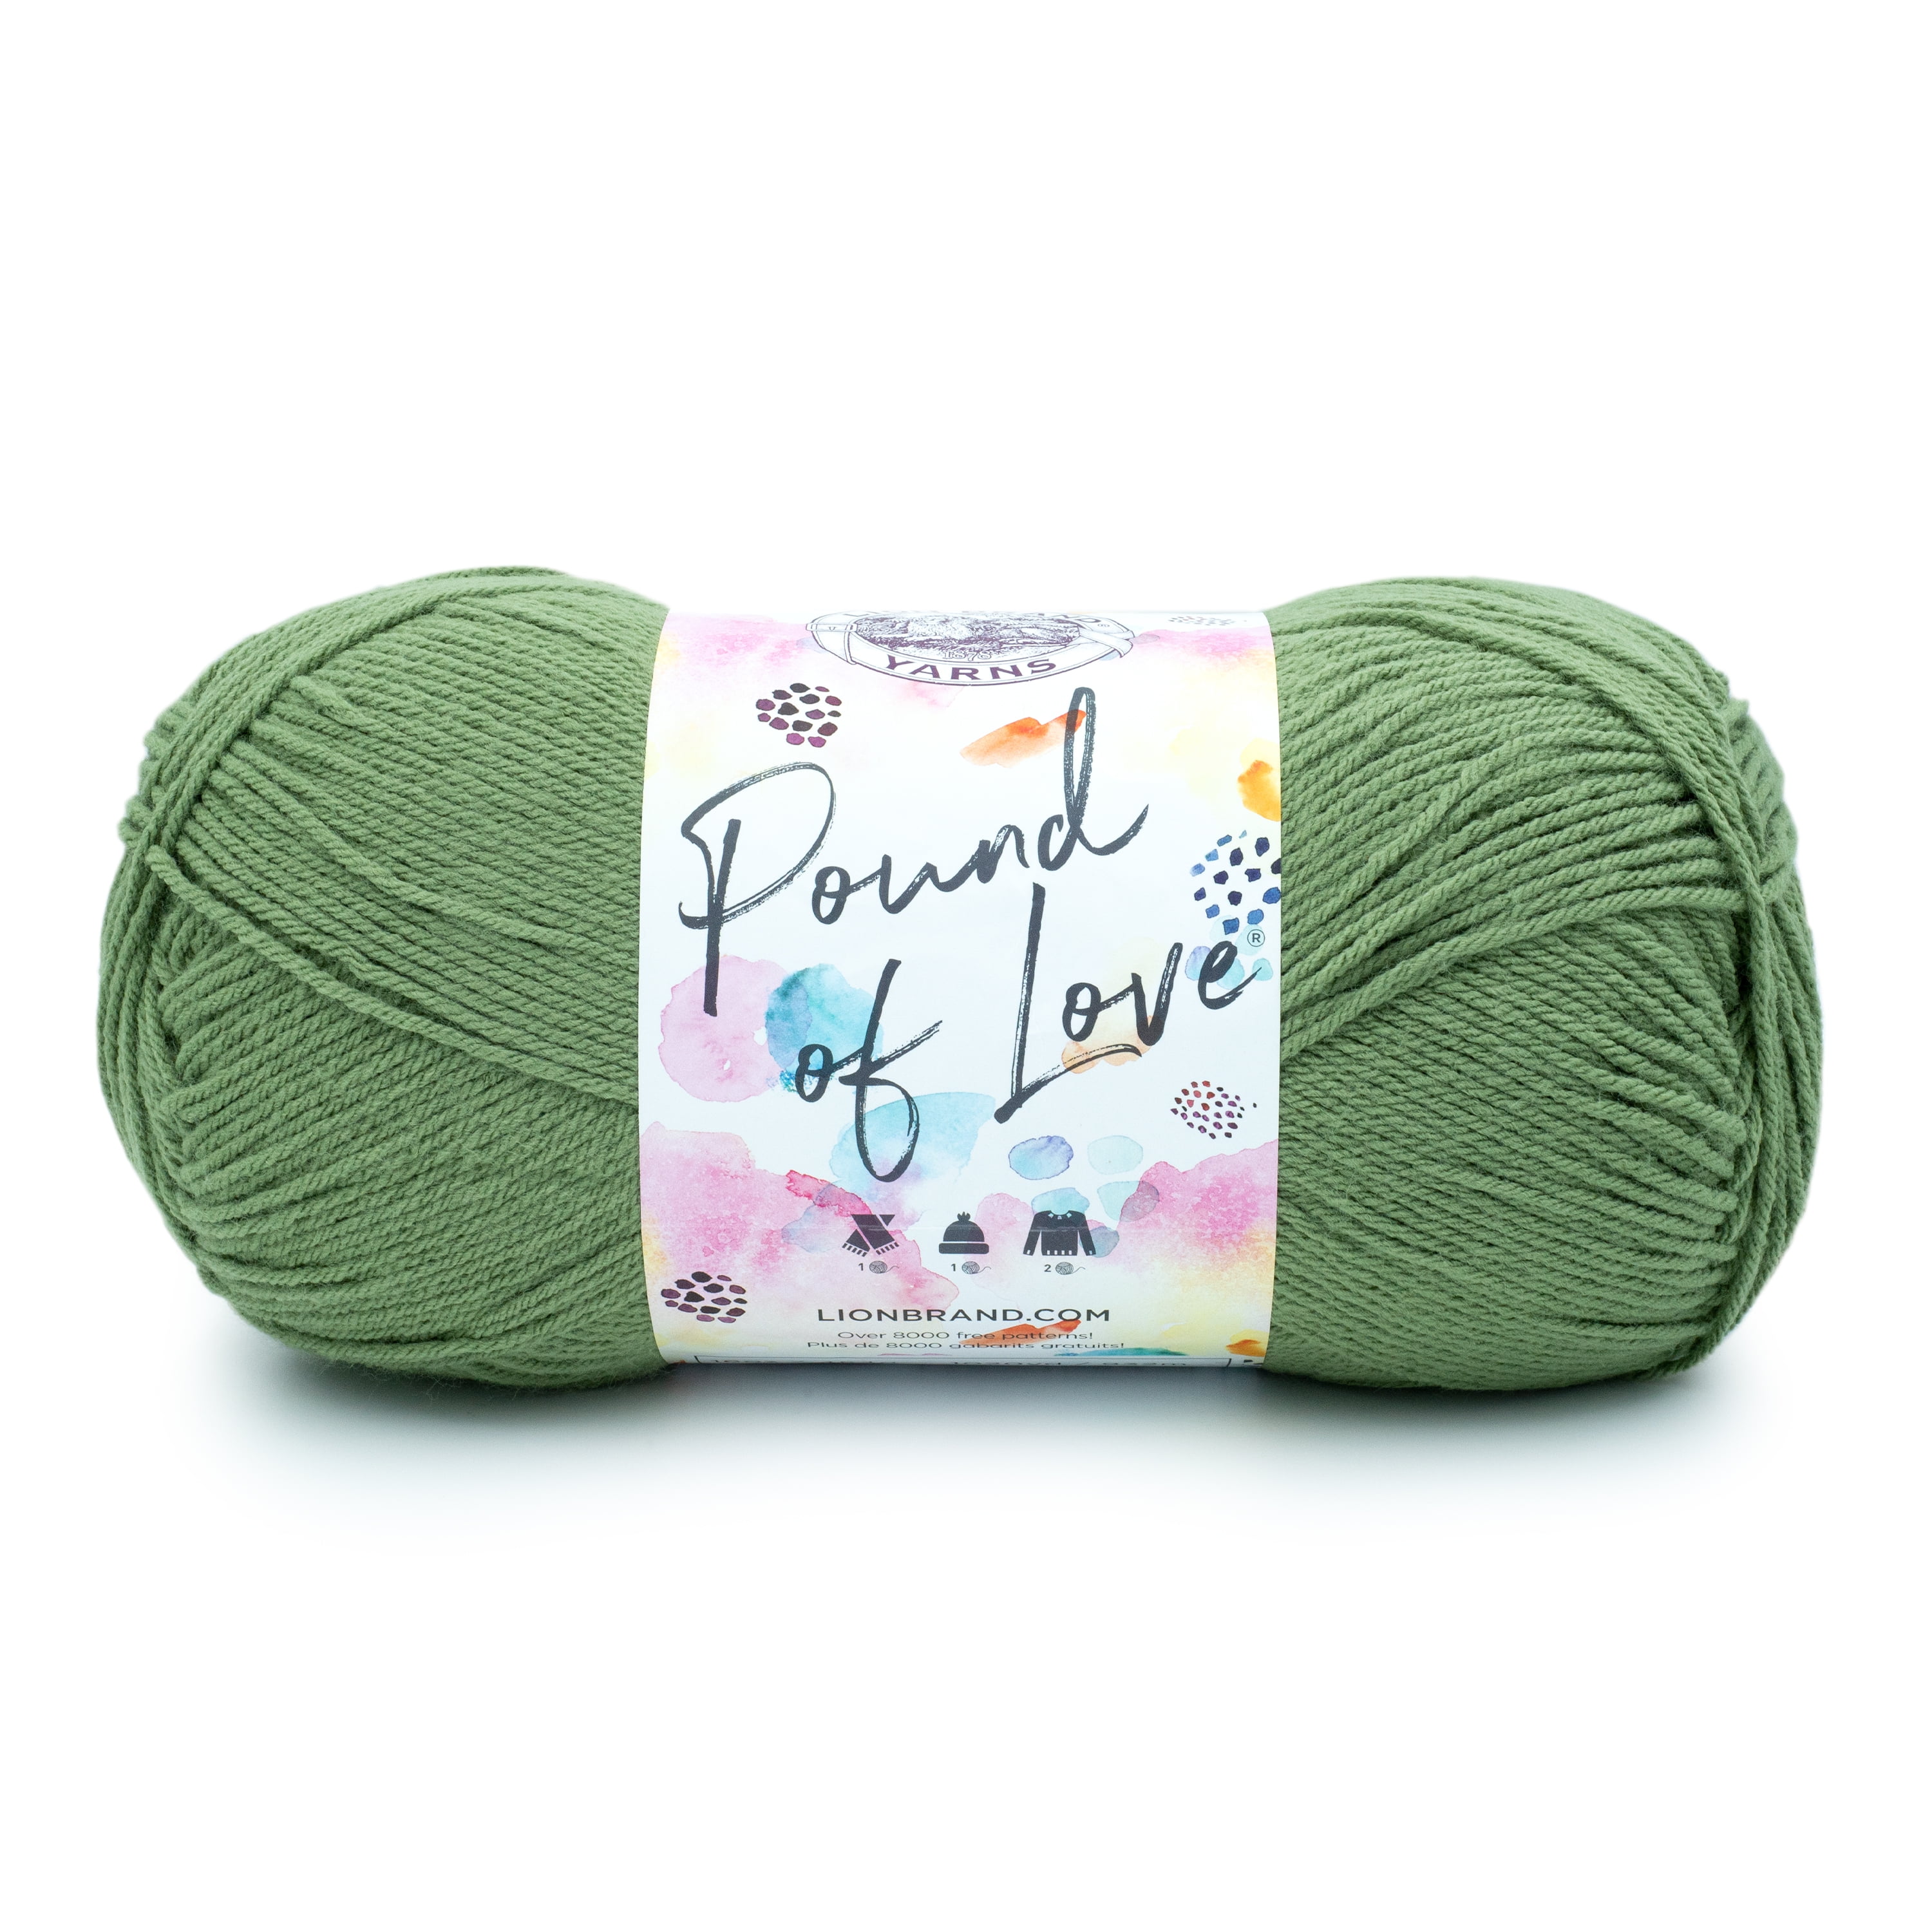 Craft Kit Crochet, Chunky Bag, olive green, 1 pack